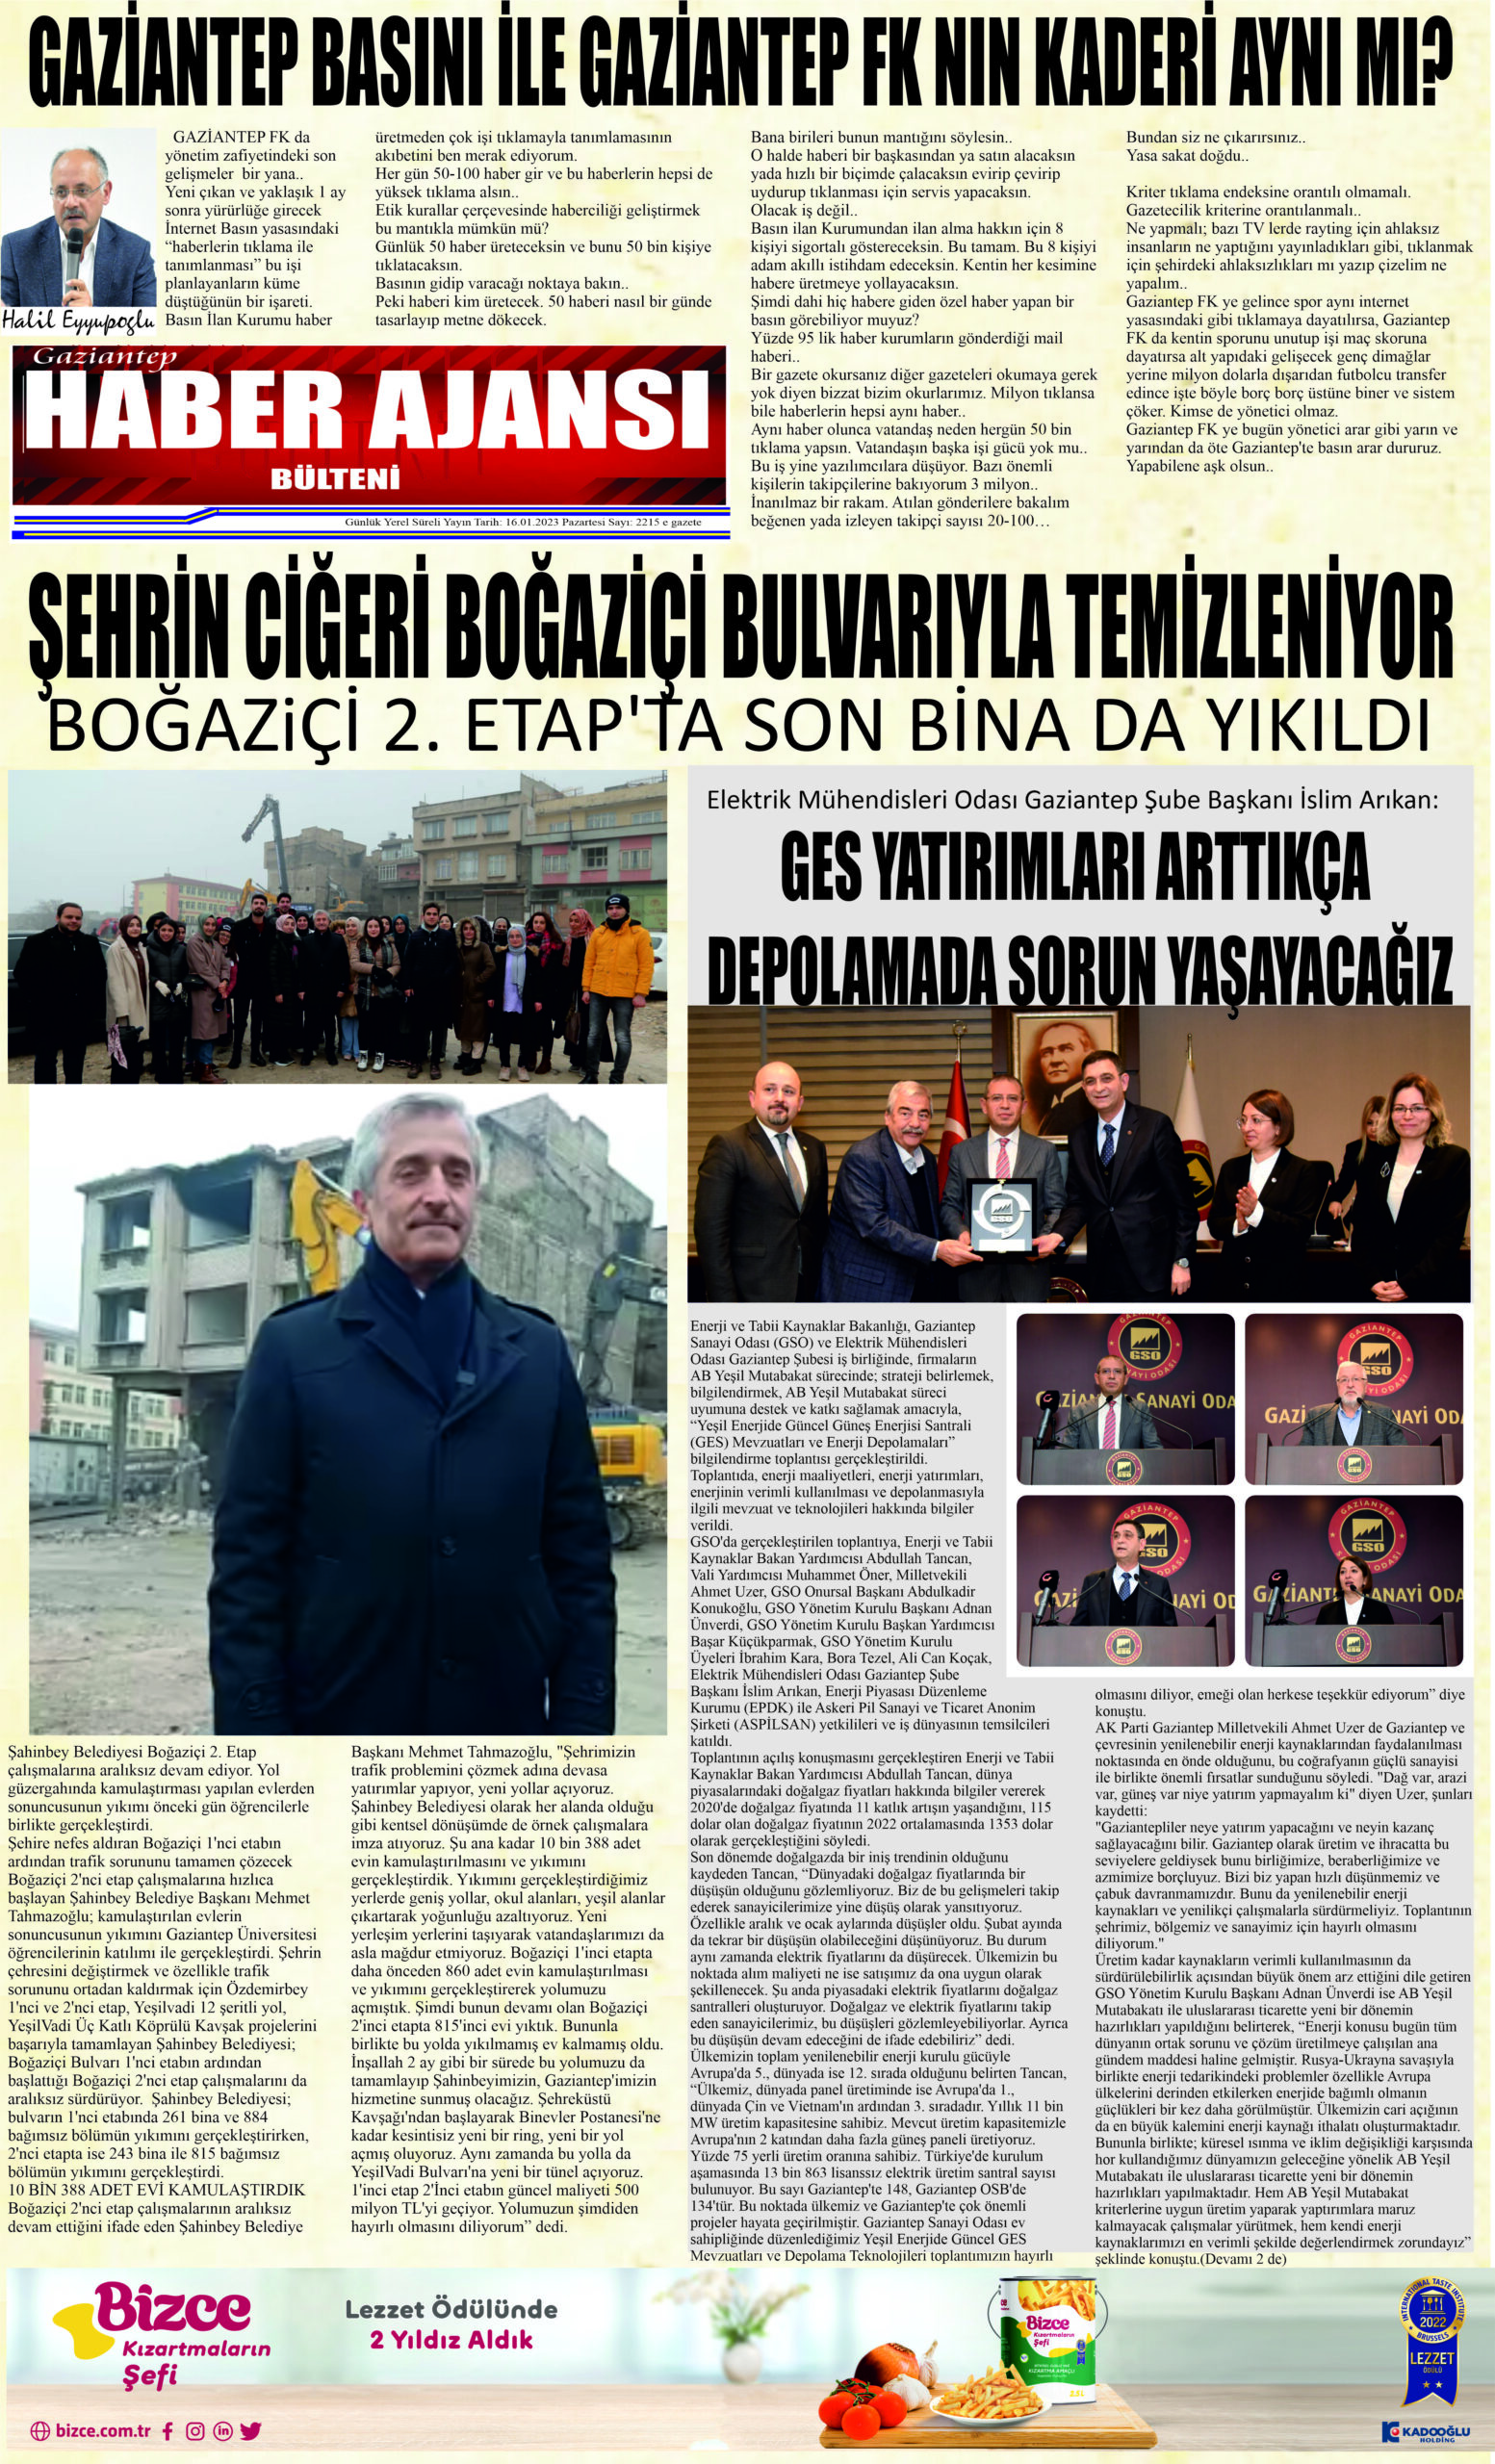 Gaziantep Haber Ajansı Bülteni Pazartesi 16.01.2023 e gazete